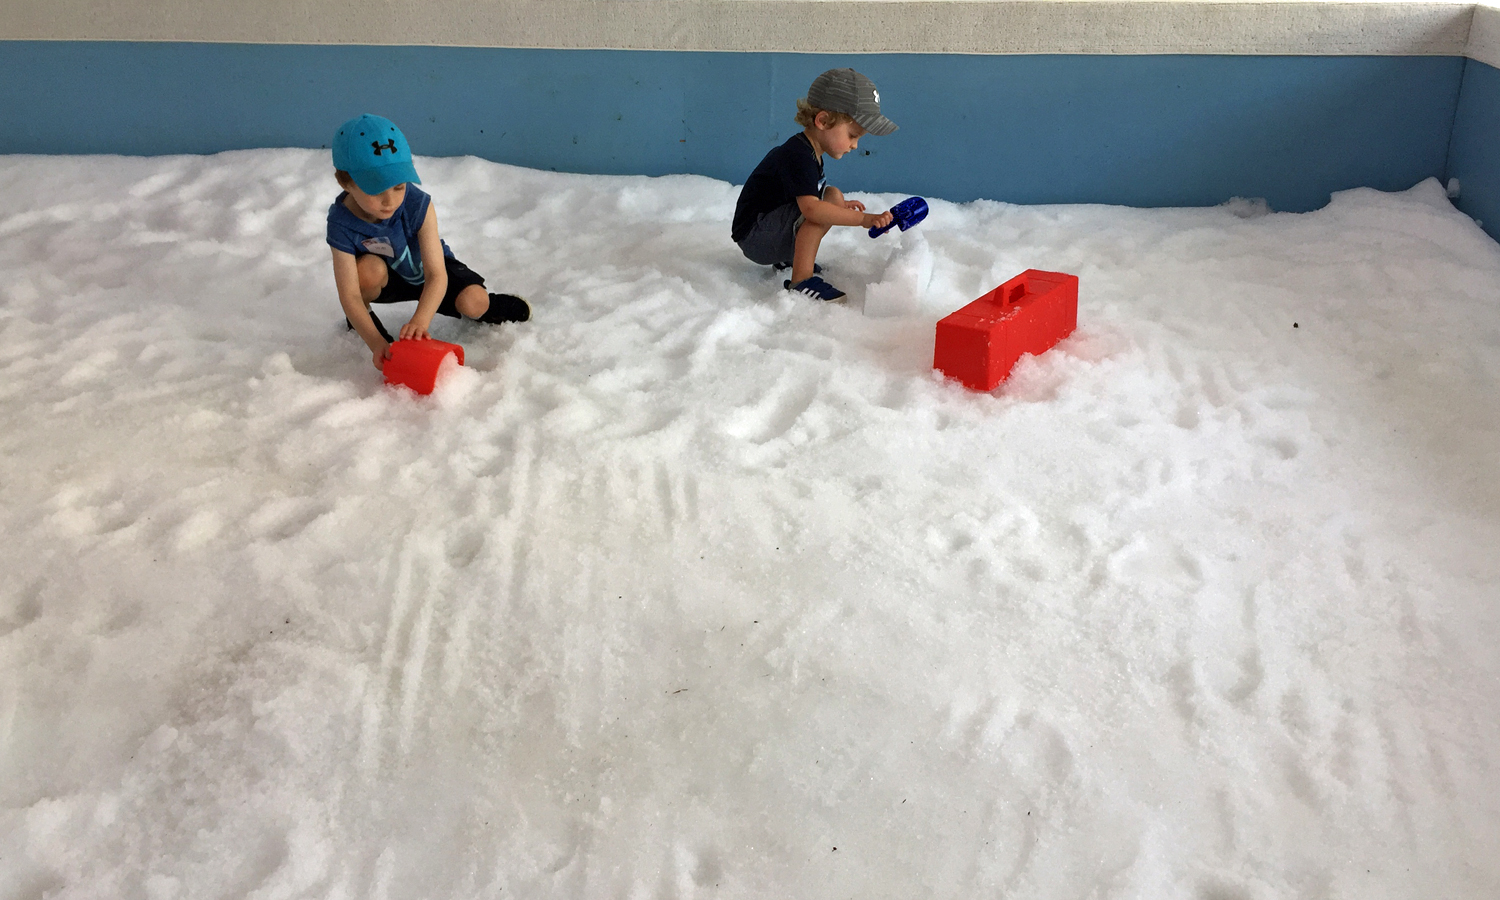 Indoor snow piles for building at Philadelphia Zoo's New Winter Exhibit!